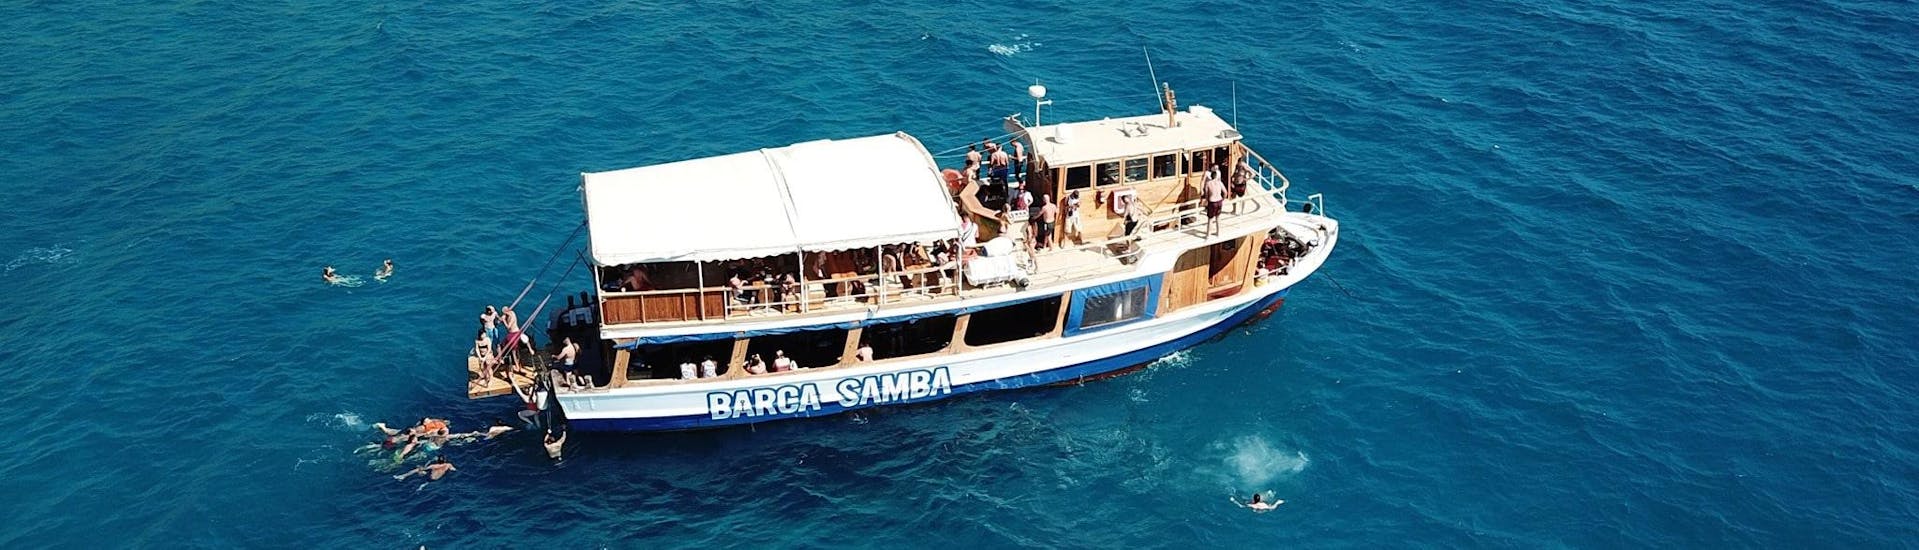 People enjoy a boat trip around Palma de Mallorca with Barca Samba. 